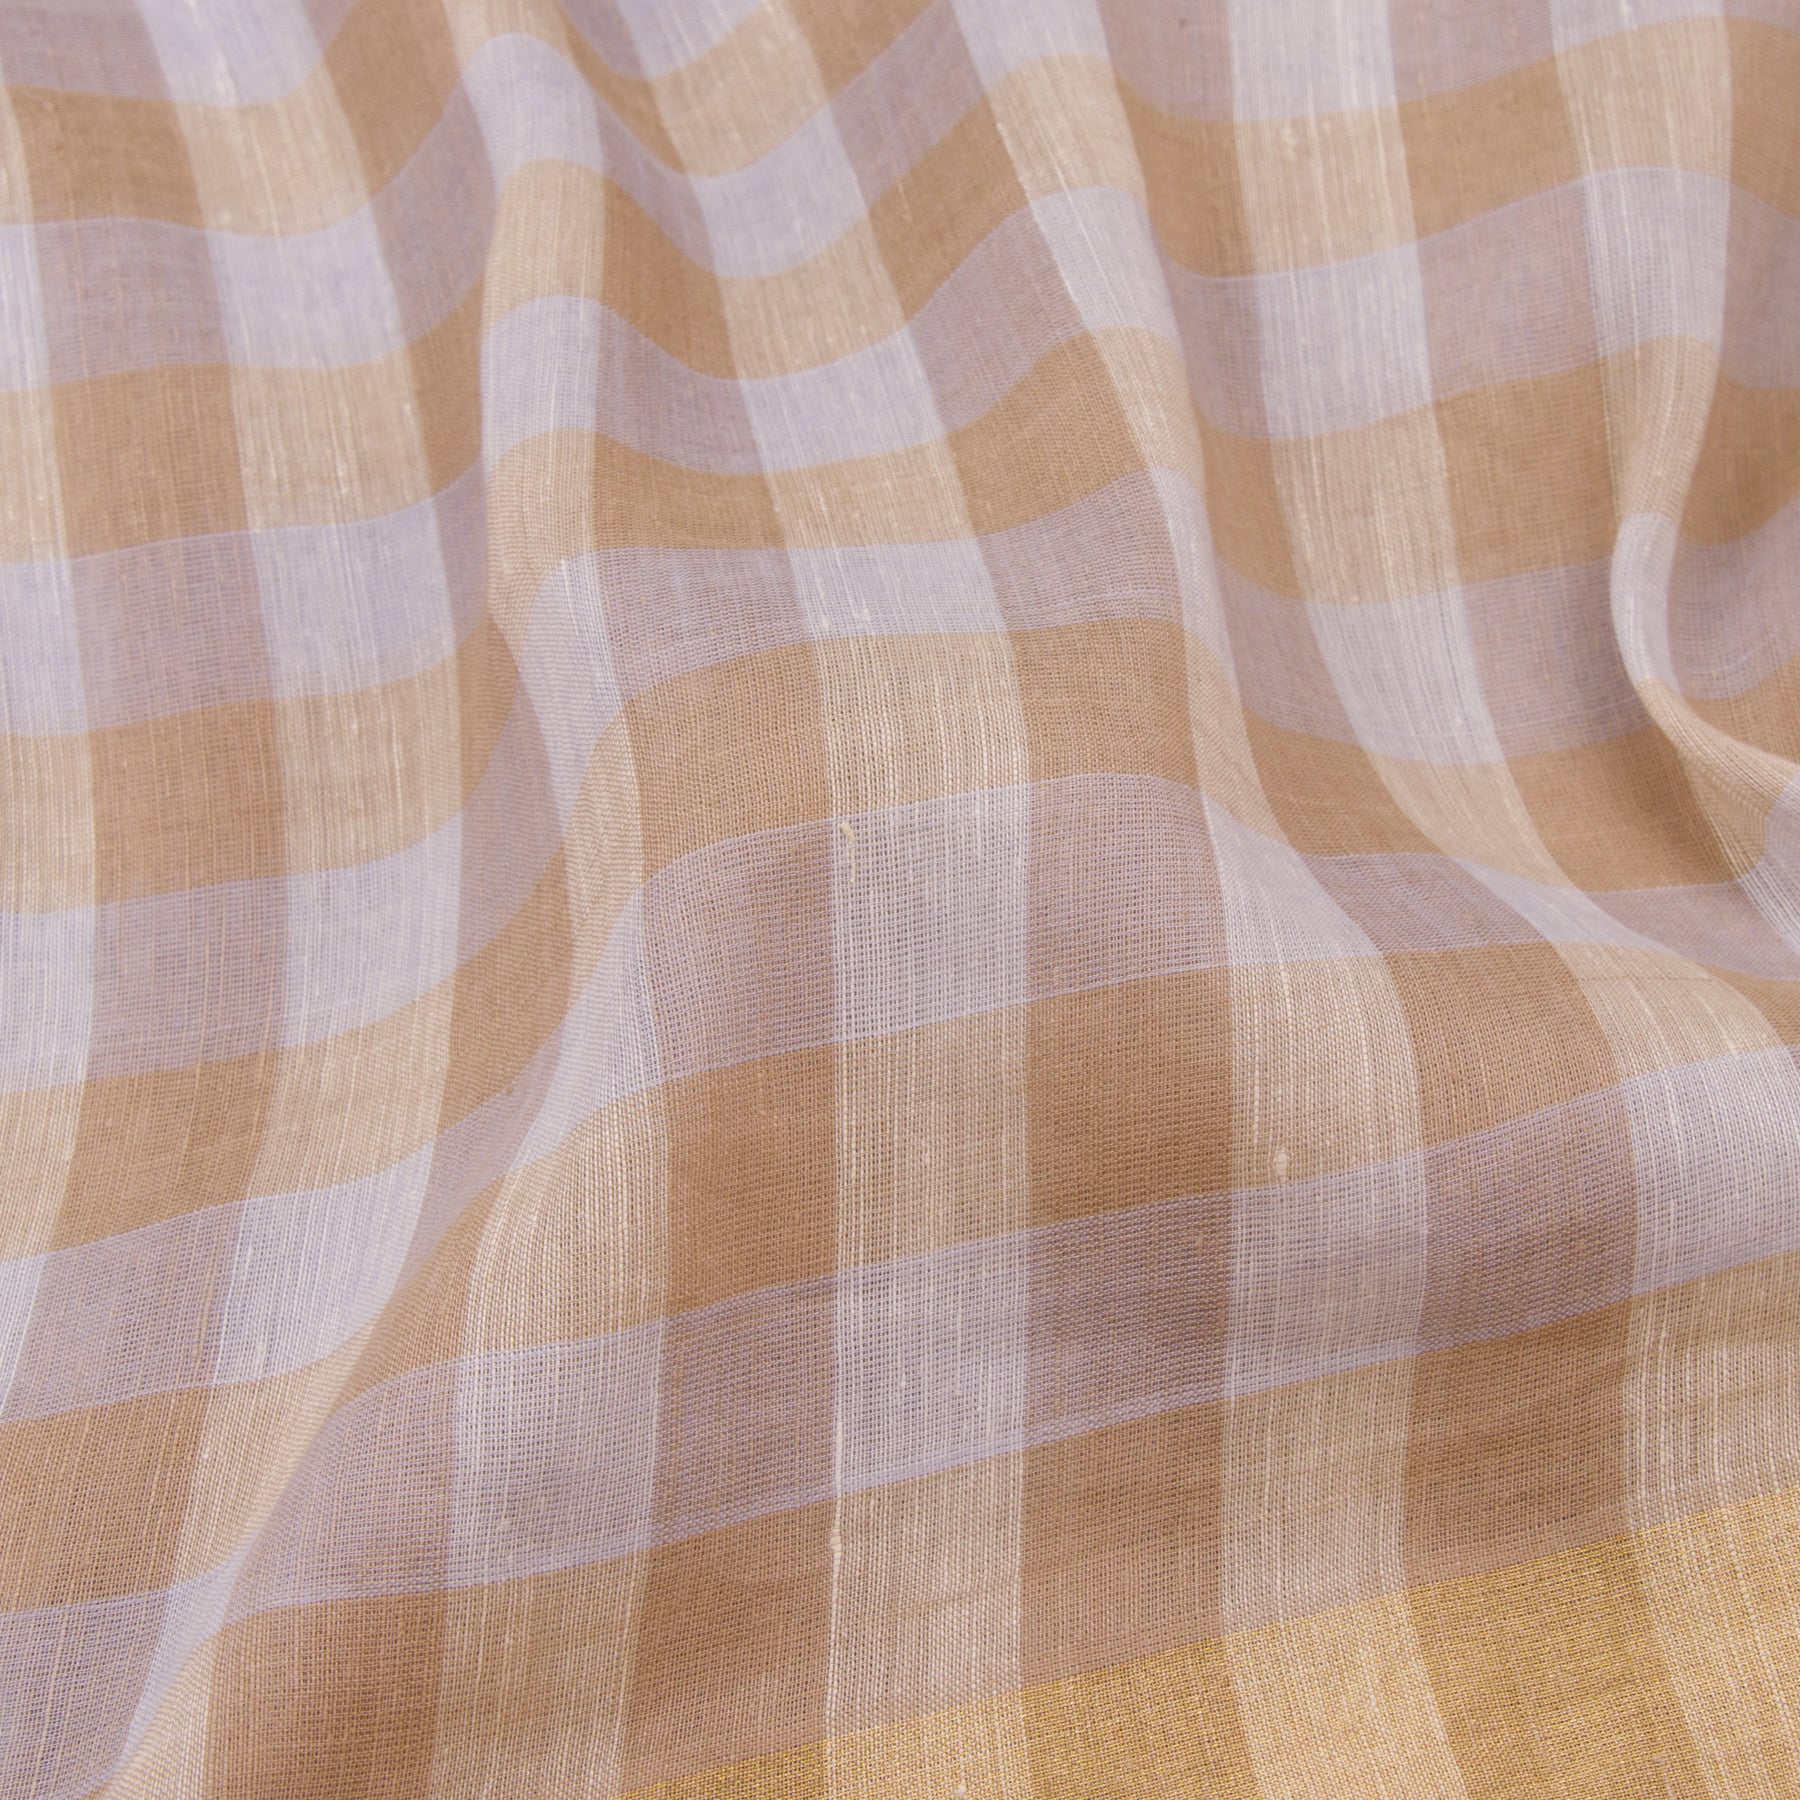 Pradeep Pillai Linen/Cotton Sari 008-01-2558 - Fabric View